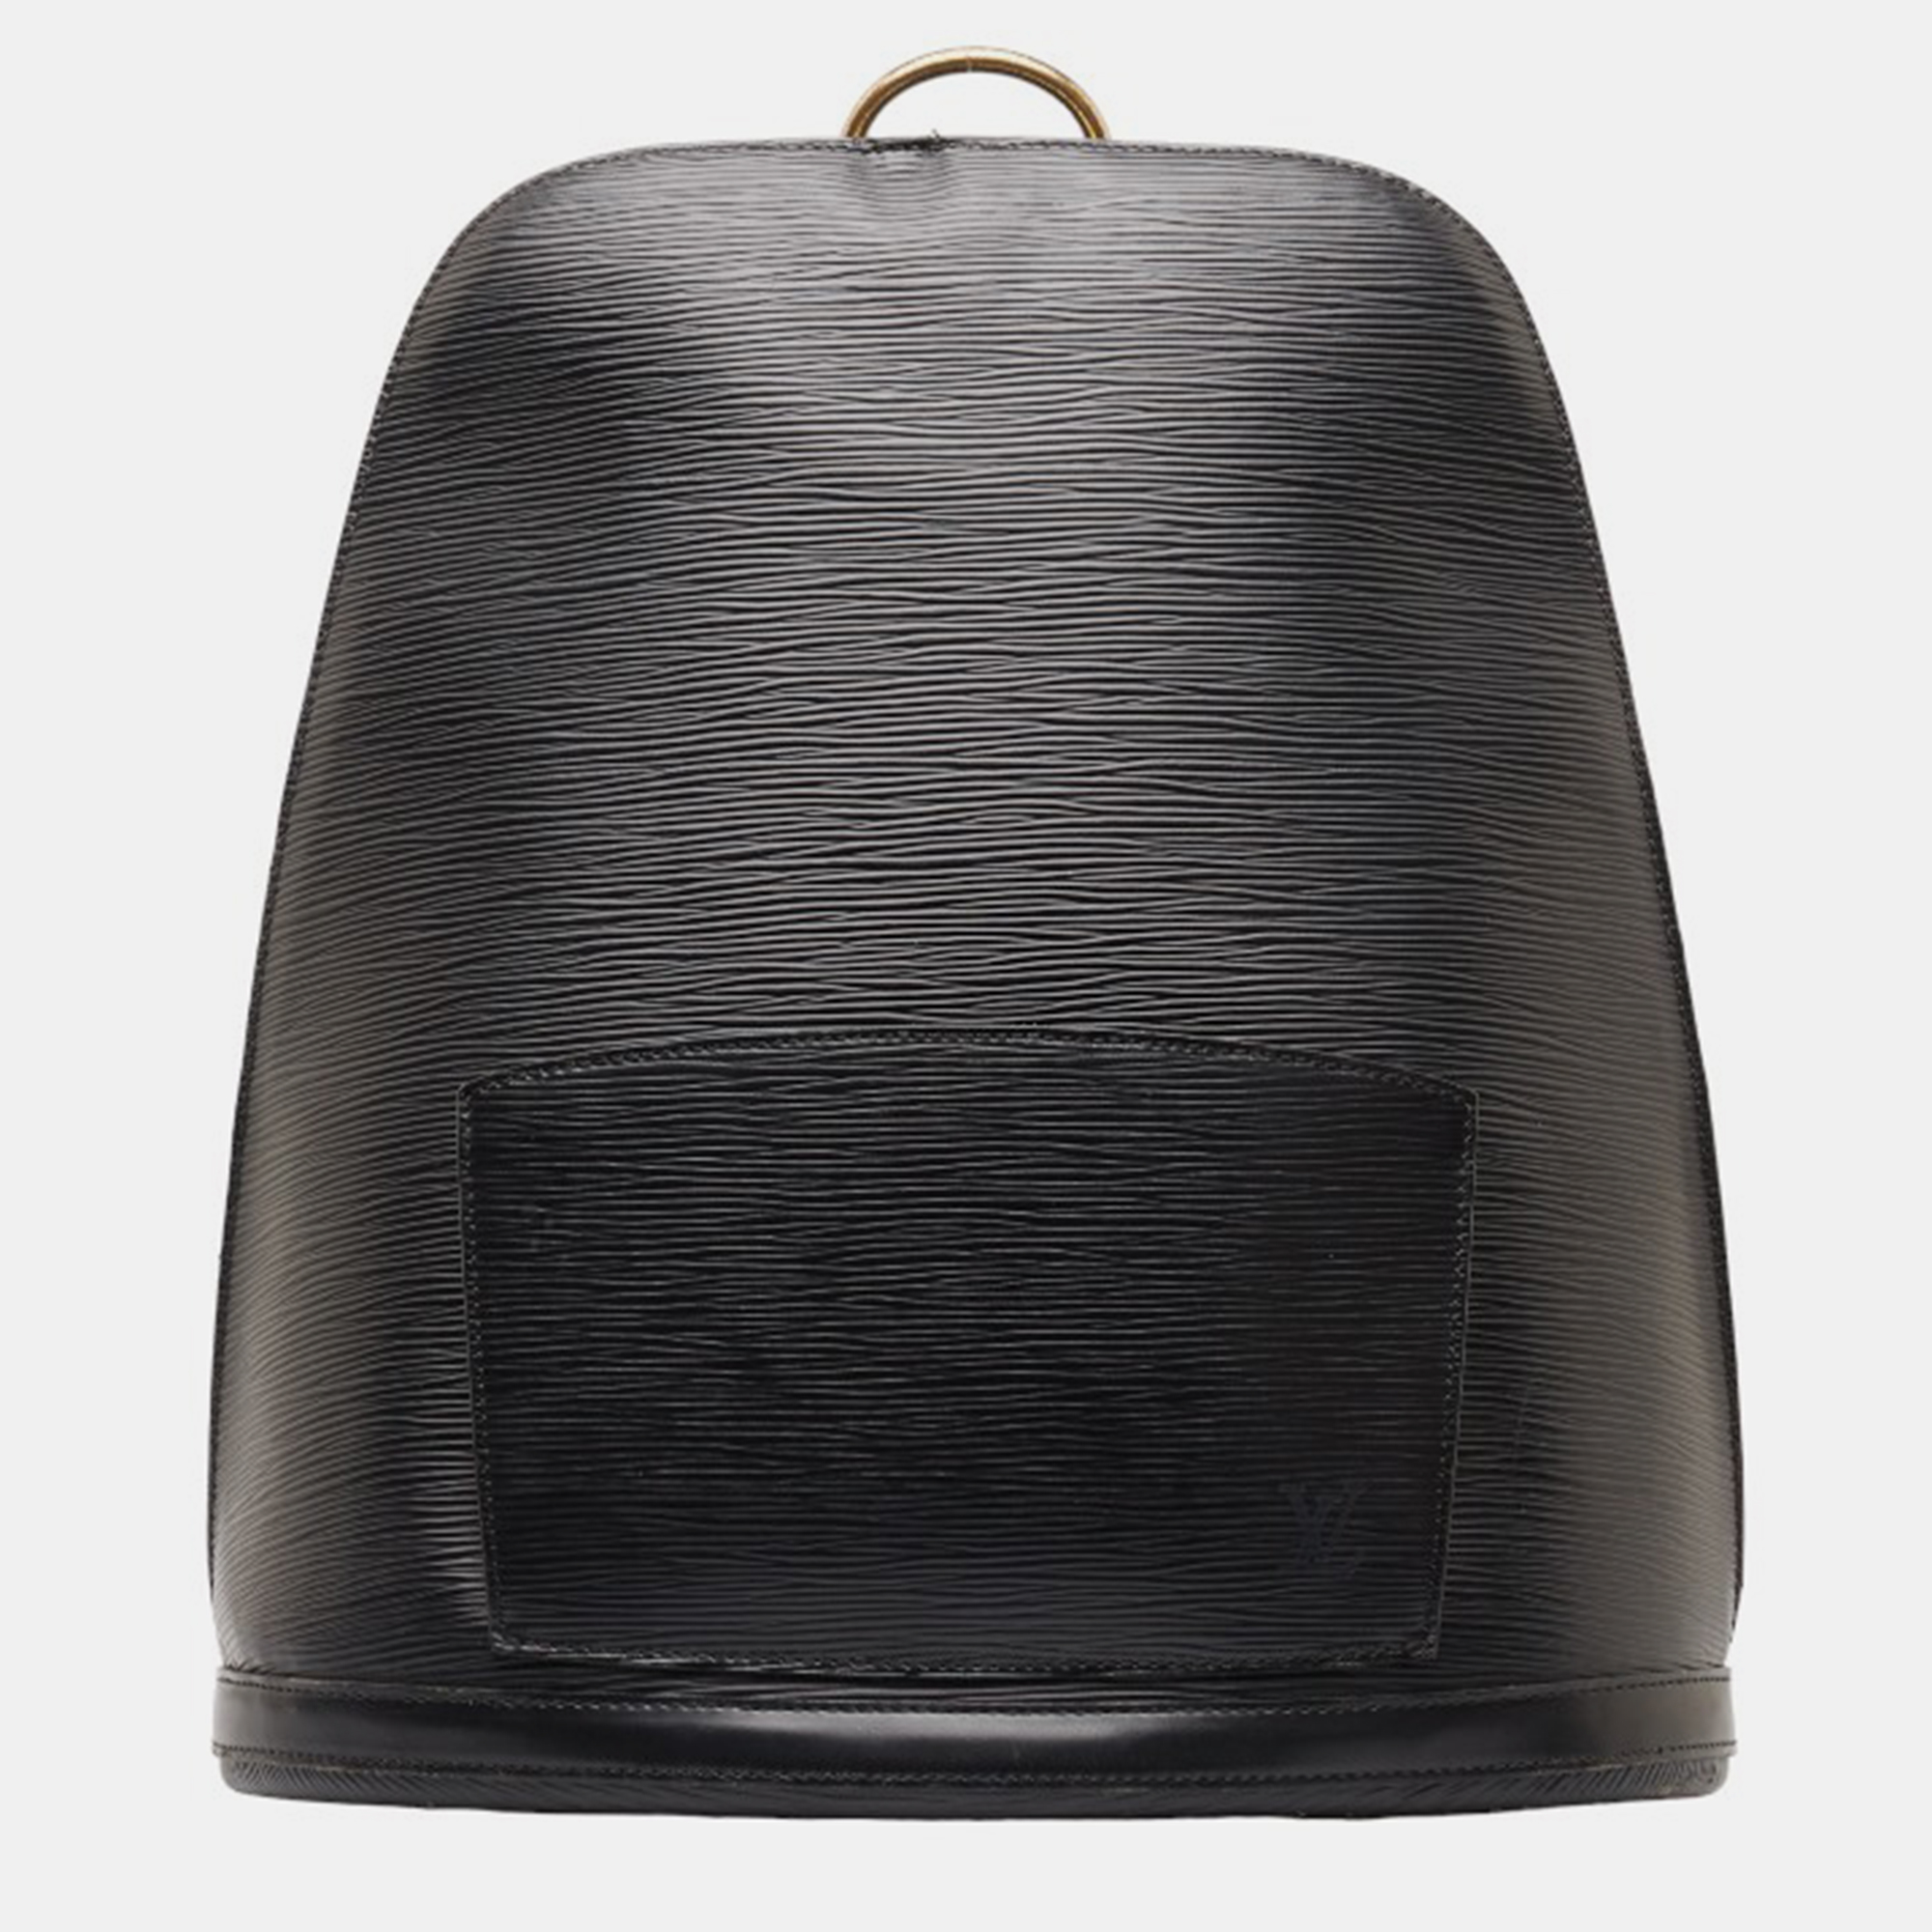 Louis vuitton black leather  gobelins backpack